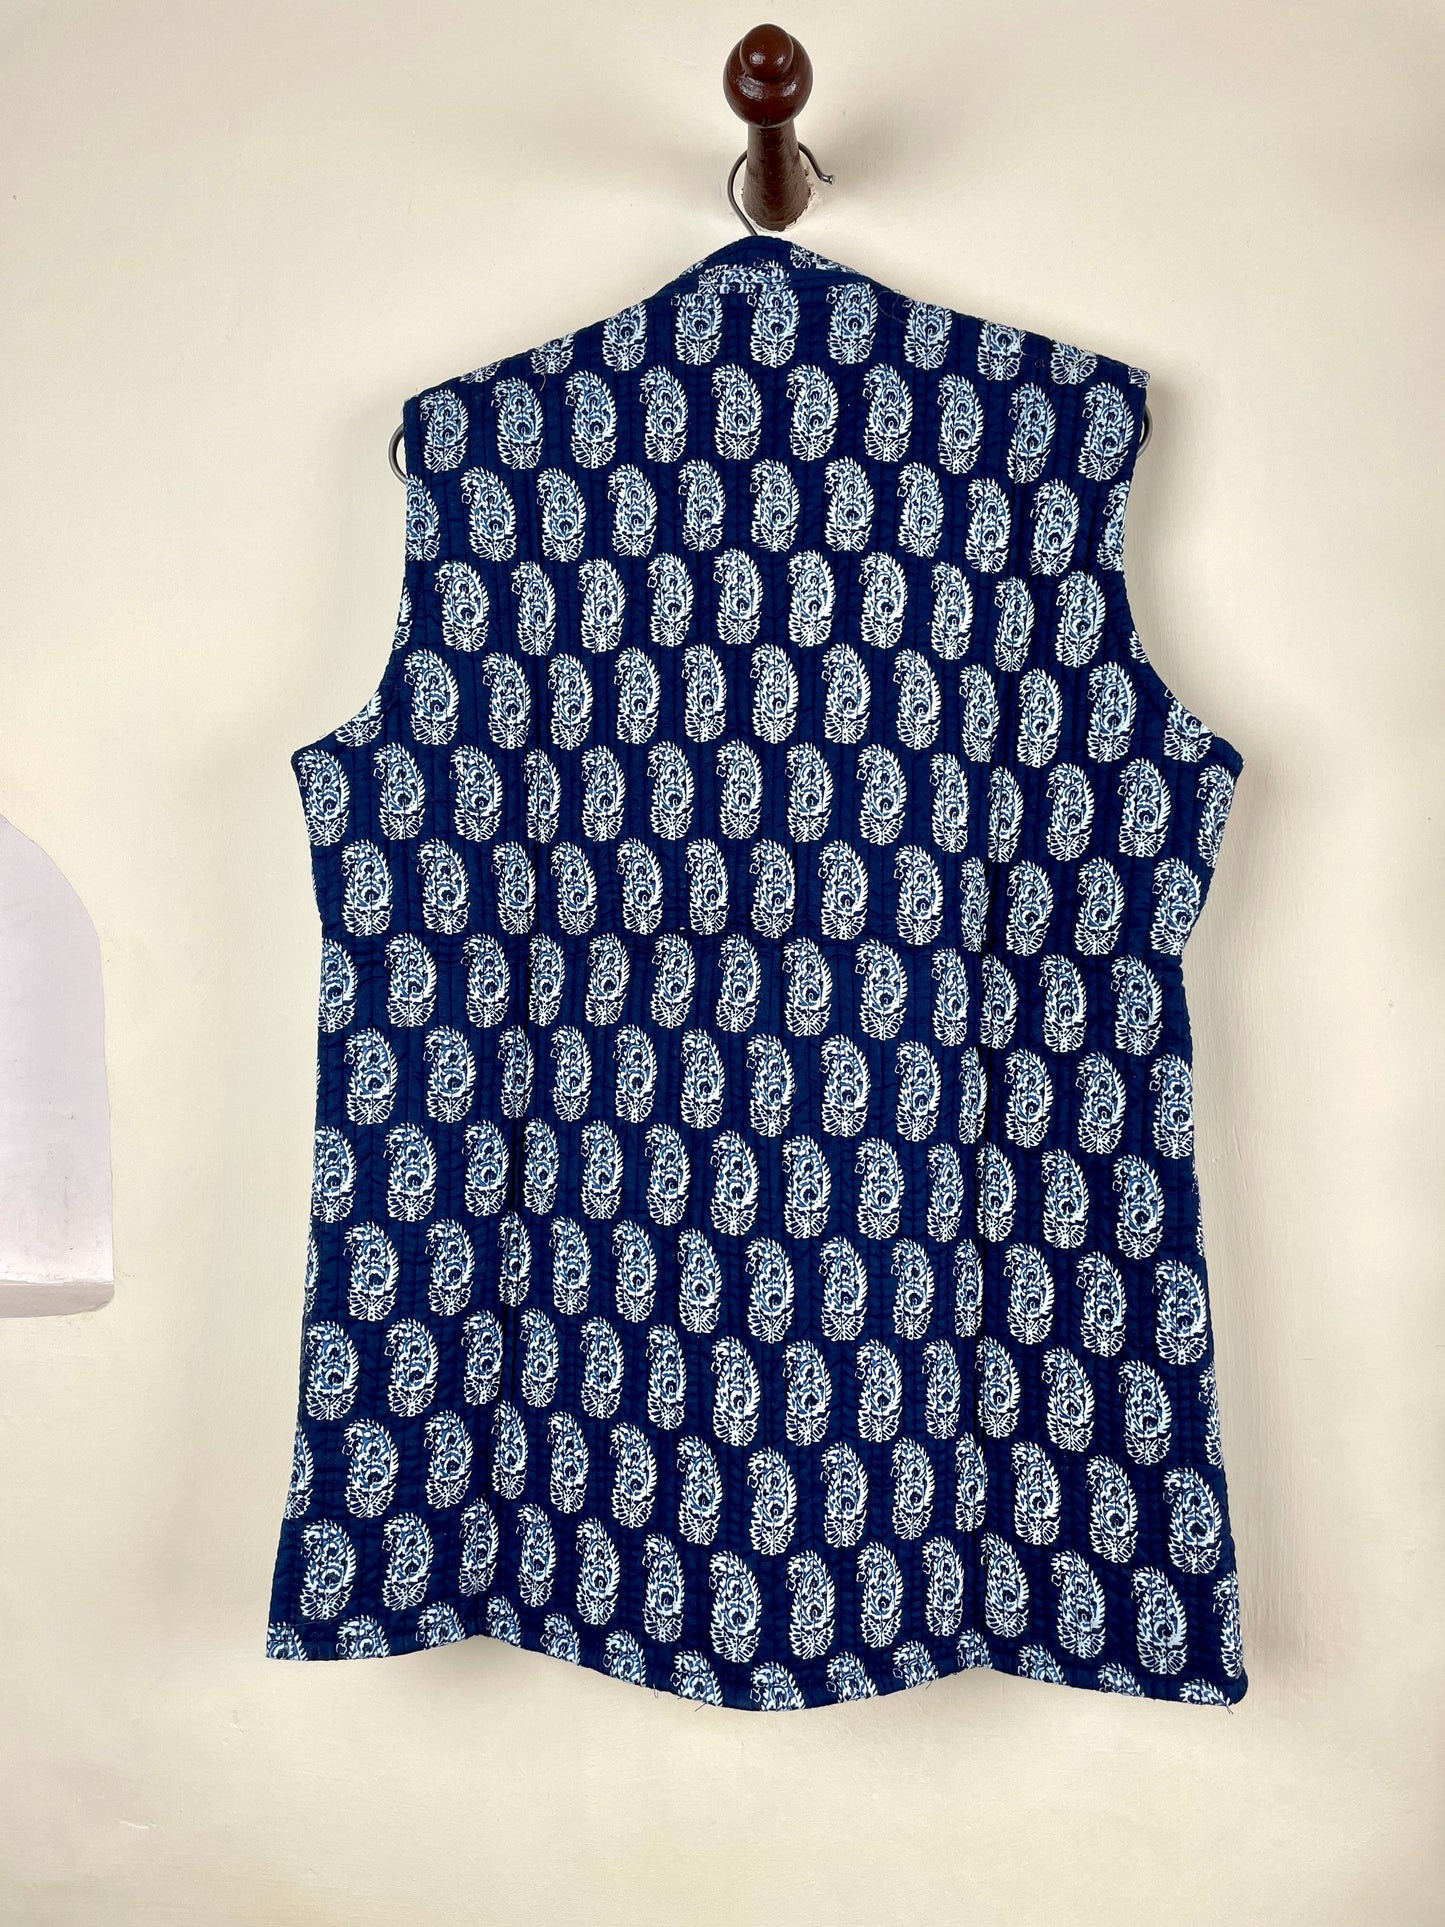 Indian Handmade Quilted Cotton Sleeveless Jacket Blue & White Stylish Women's Coat, Reversible Jacket for Her